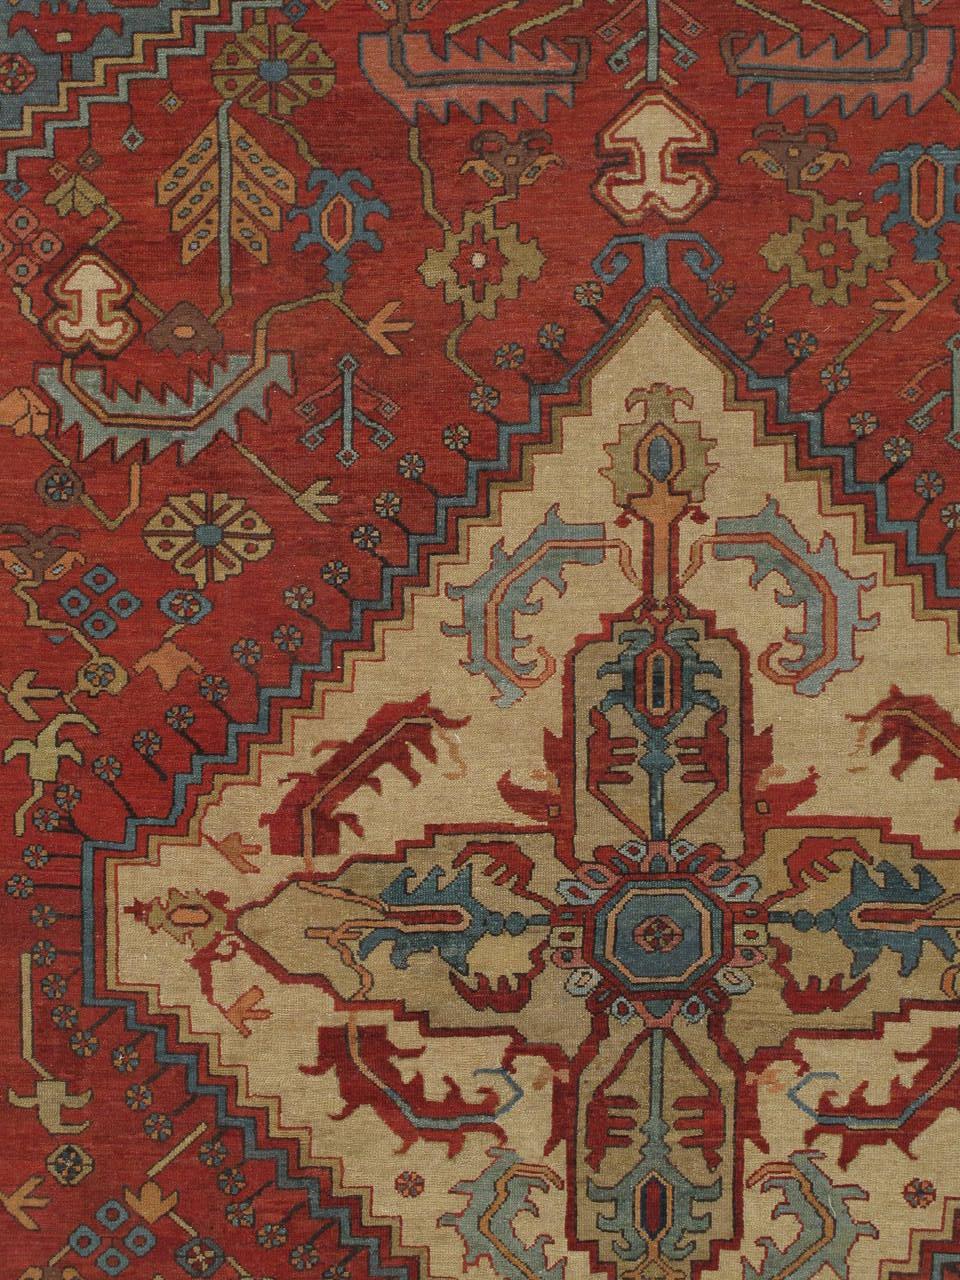 19th Century Antique Persian Serapi Carpet, Handmade Wool Oriental Rug, Rust, Ivory, Lt Blue For Sale